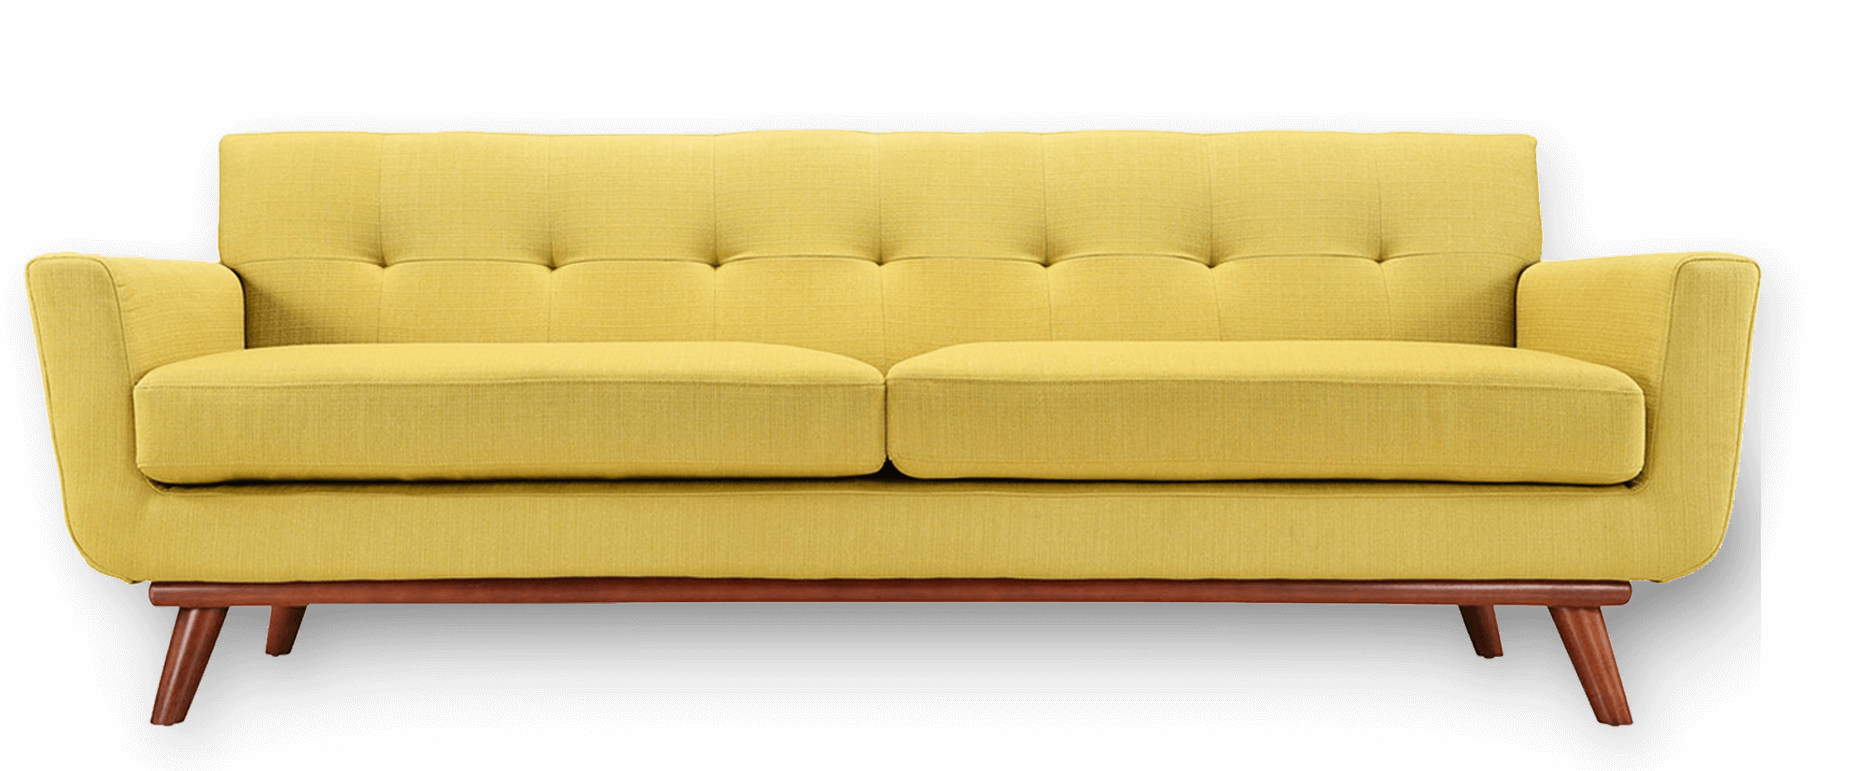 Yellow Sofa Free Transparent Image HD PNG Image